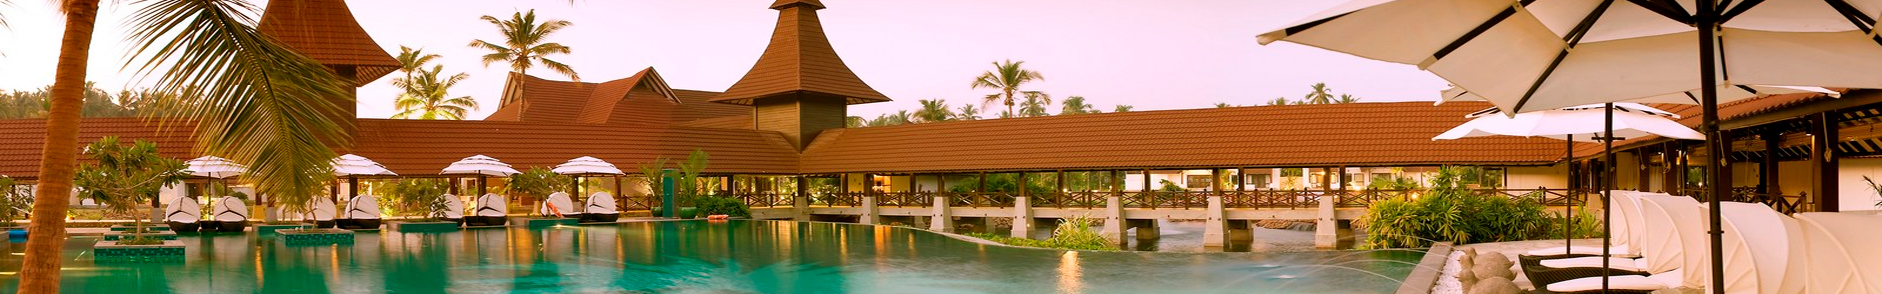 Sea Lagoon Health Resort Cochin, Kerala